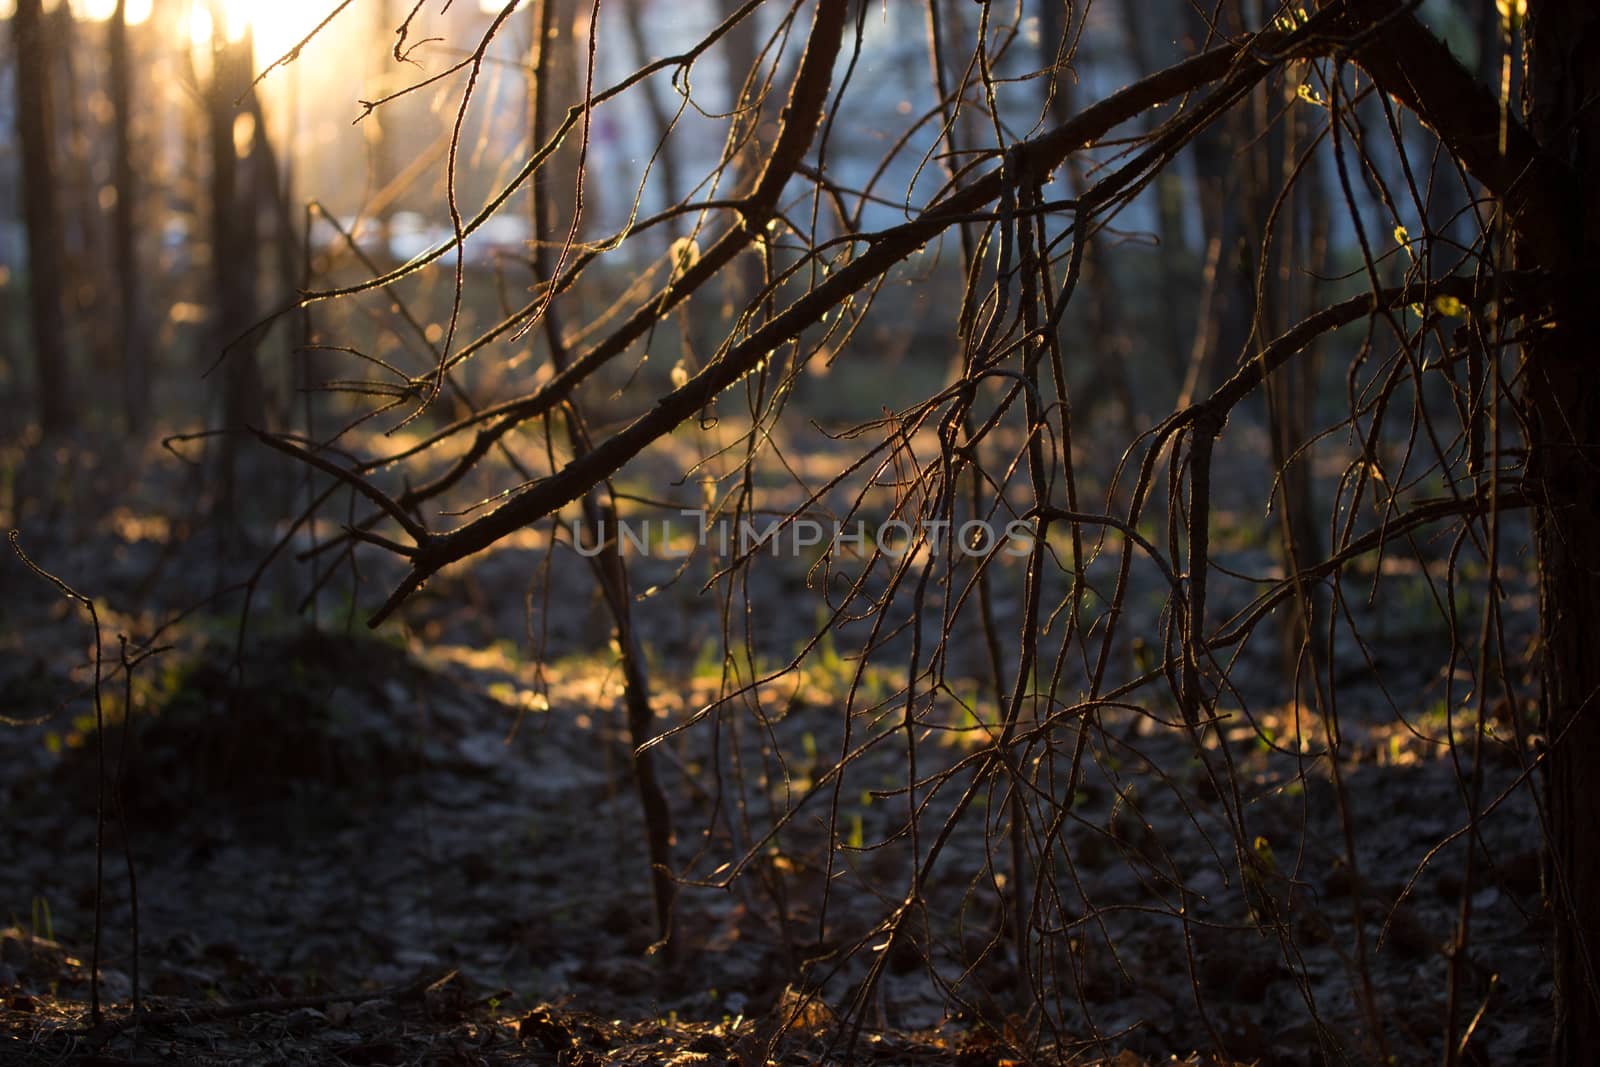 sunrise in a forest, by liwei12